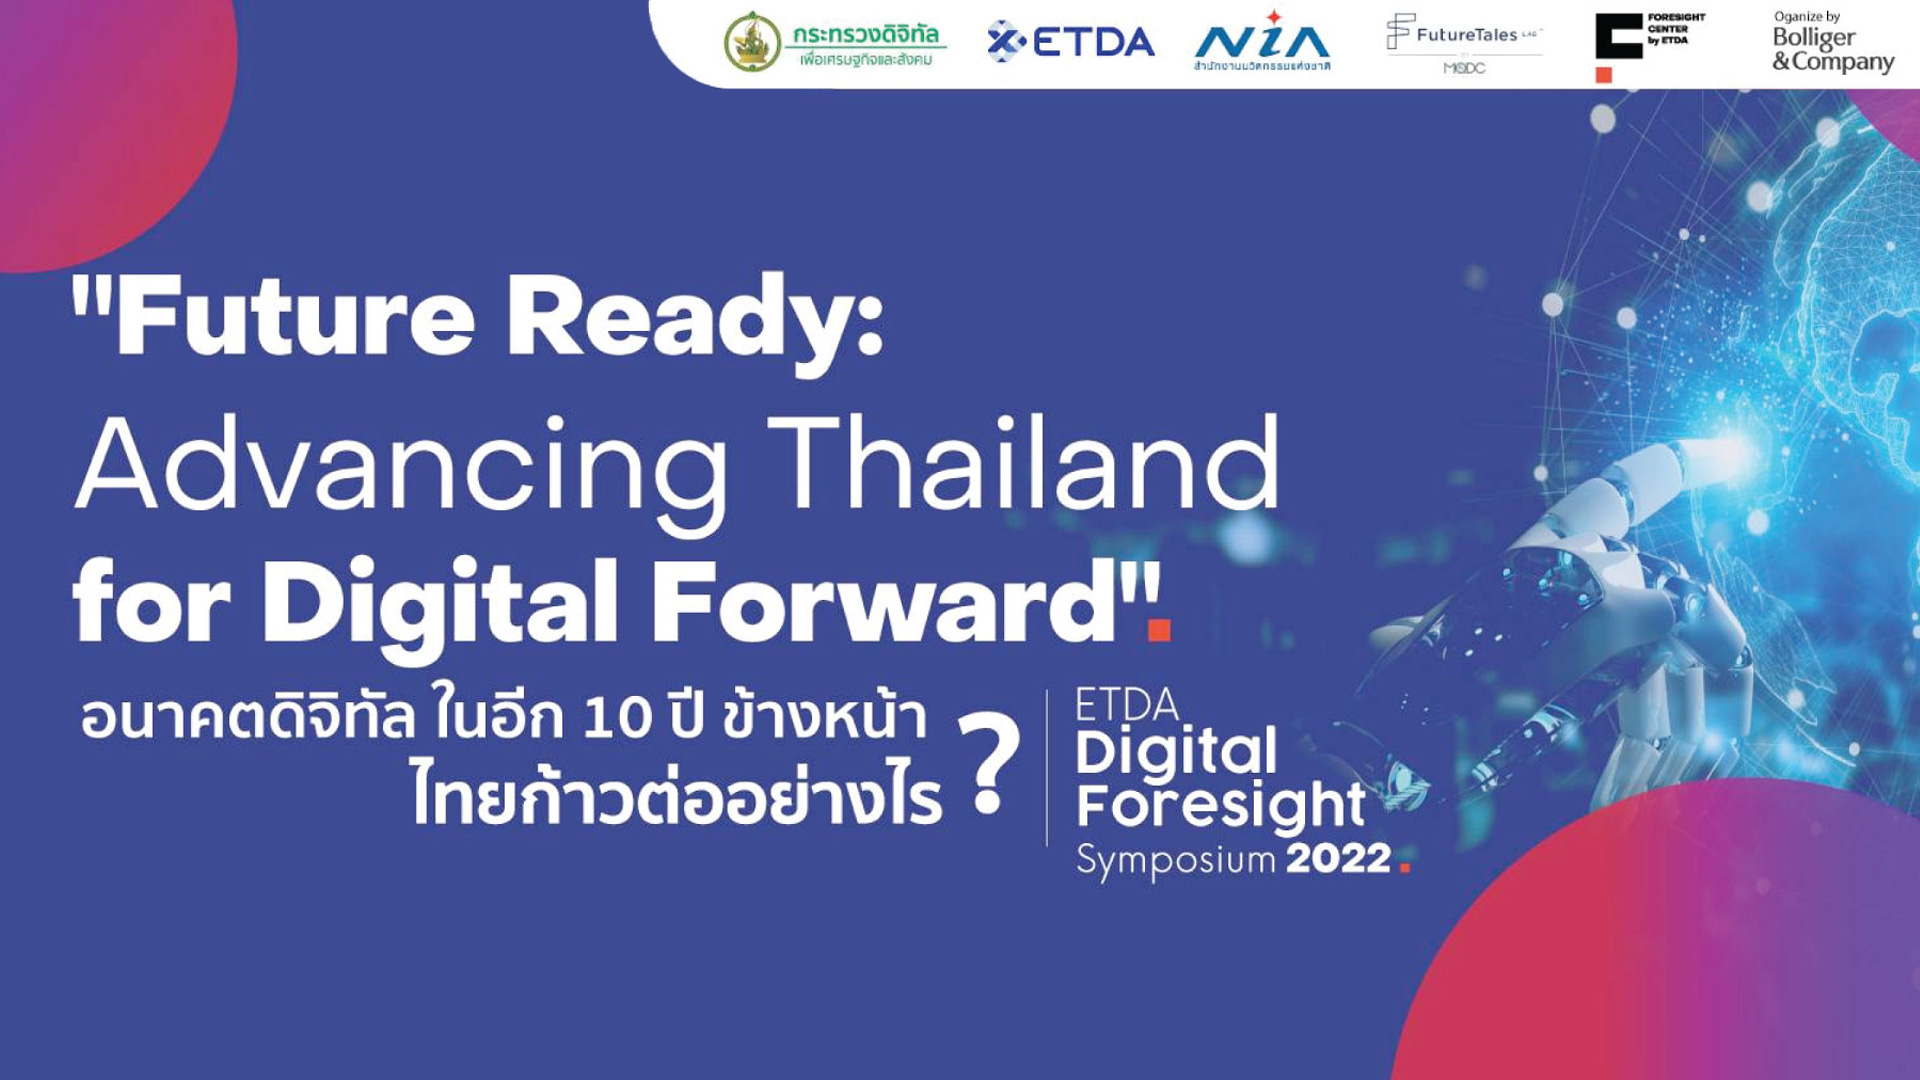 ETDA จับมือกูรูด้าน Foresight จัดงานใหญ่ “Future Ready: Advancing Thailand for the Digital Forward” สะท้อนภาพอนาคตดิจิทัล ในอีก 10 ปีข้างหน้า ไทยก้าวต่ออย่างไร